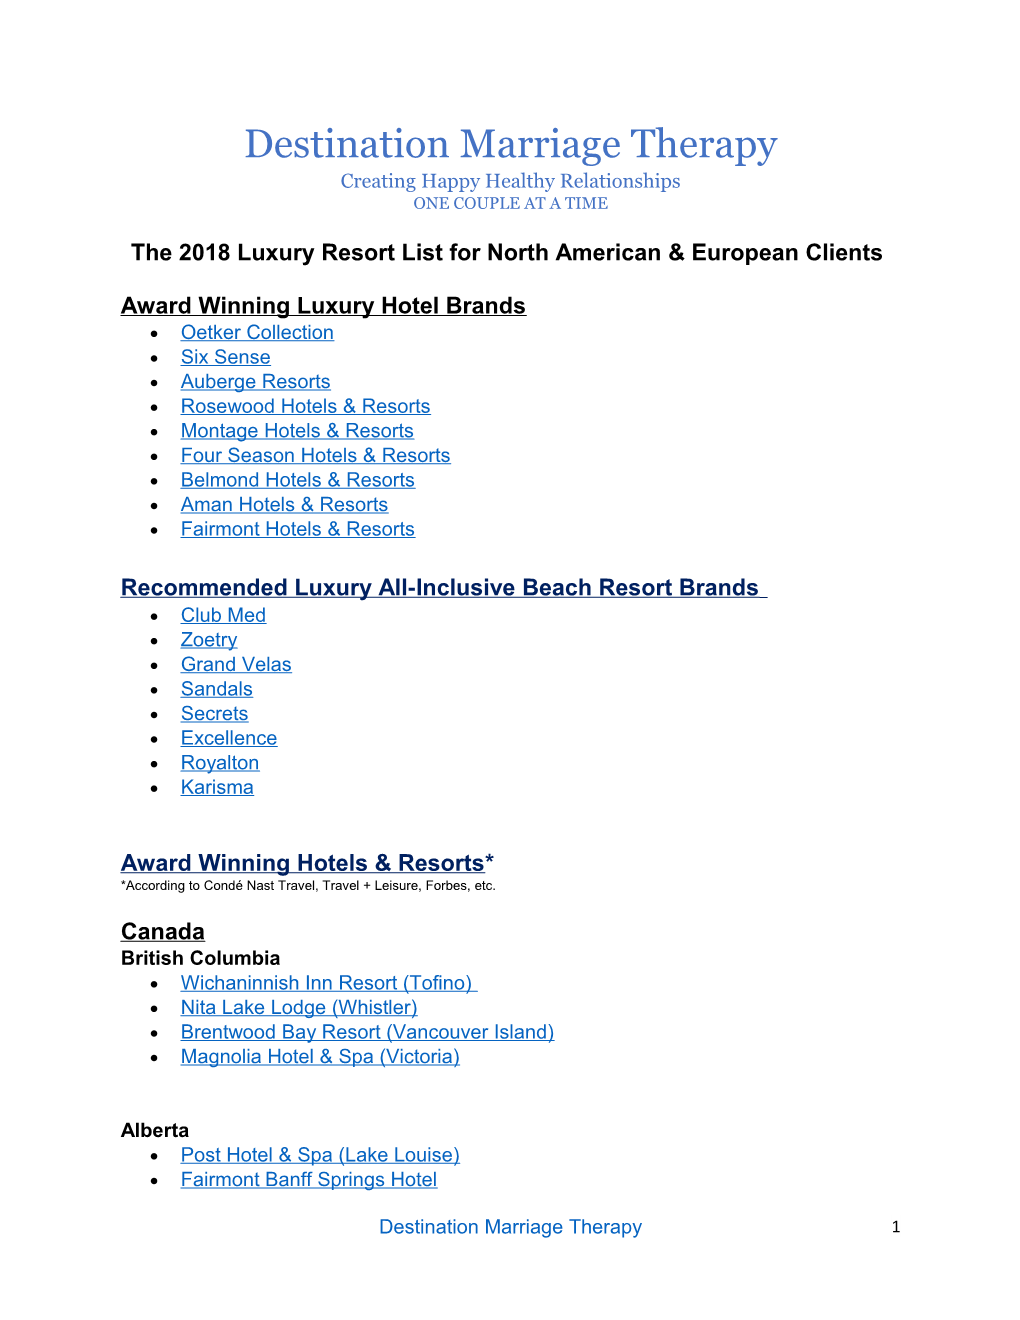 The 2018Luxury Resort Listfor North American & European Clients